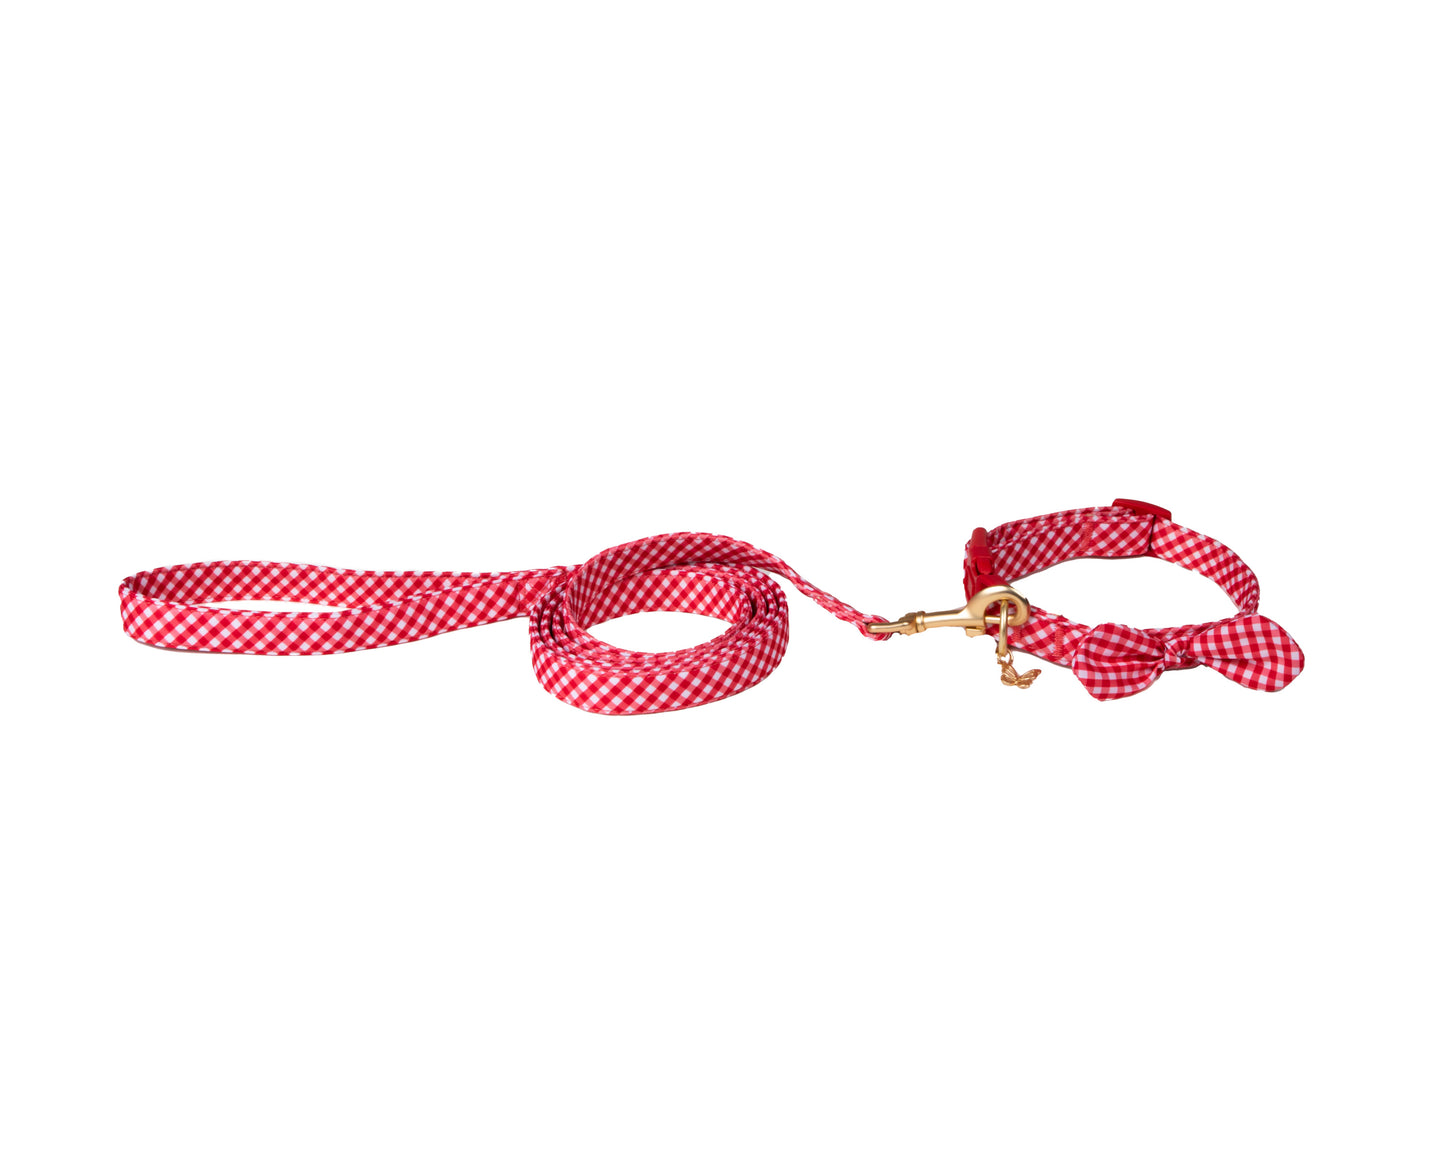 Red Gingham Collar Leash Set